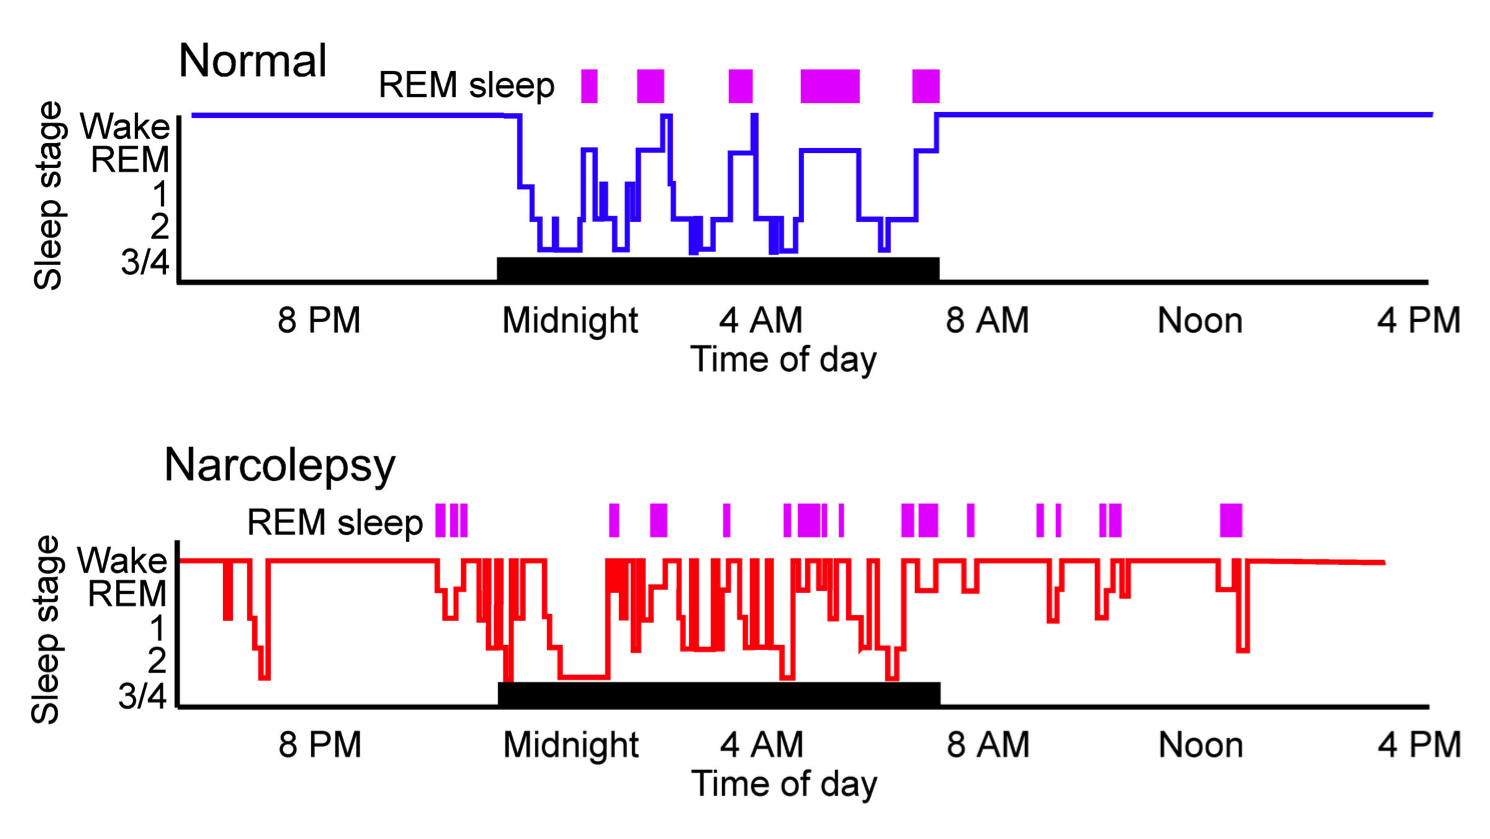 average rem sleep time